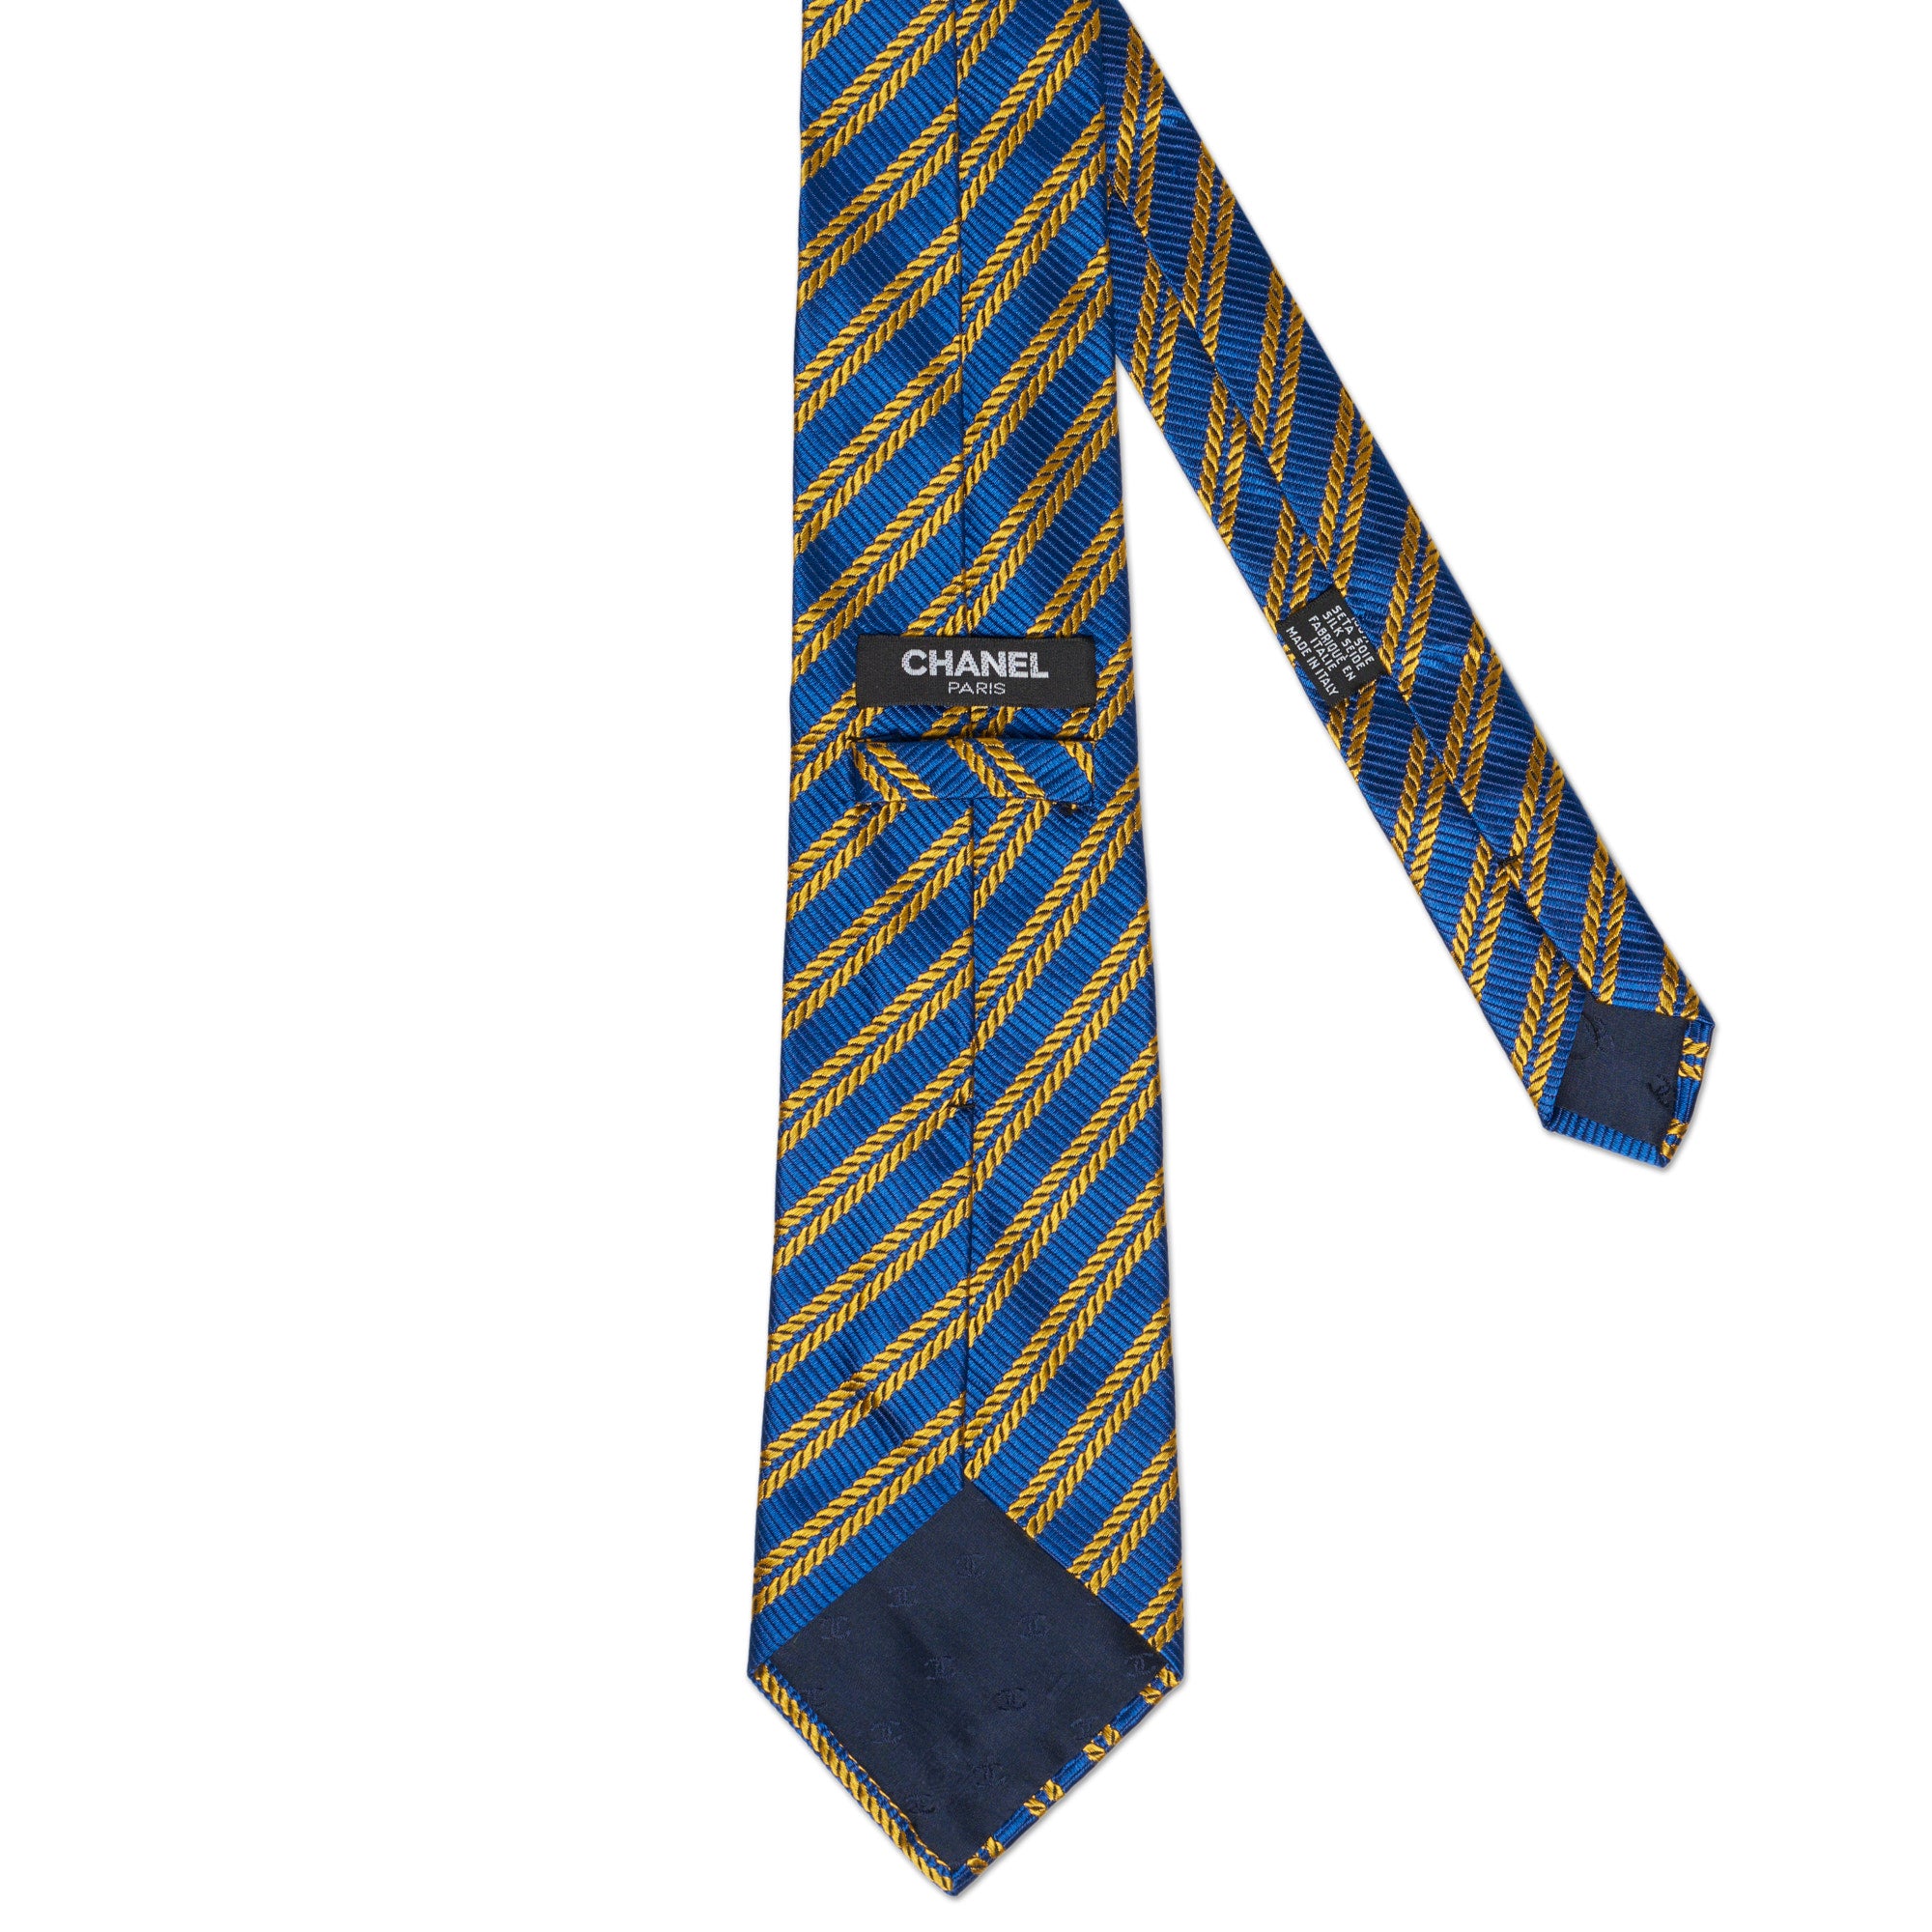 CHANEL PARIS Handmade Blue Striped Silk Tie